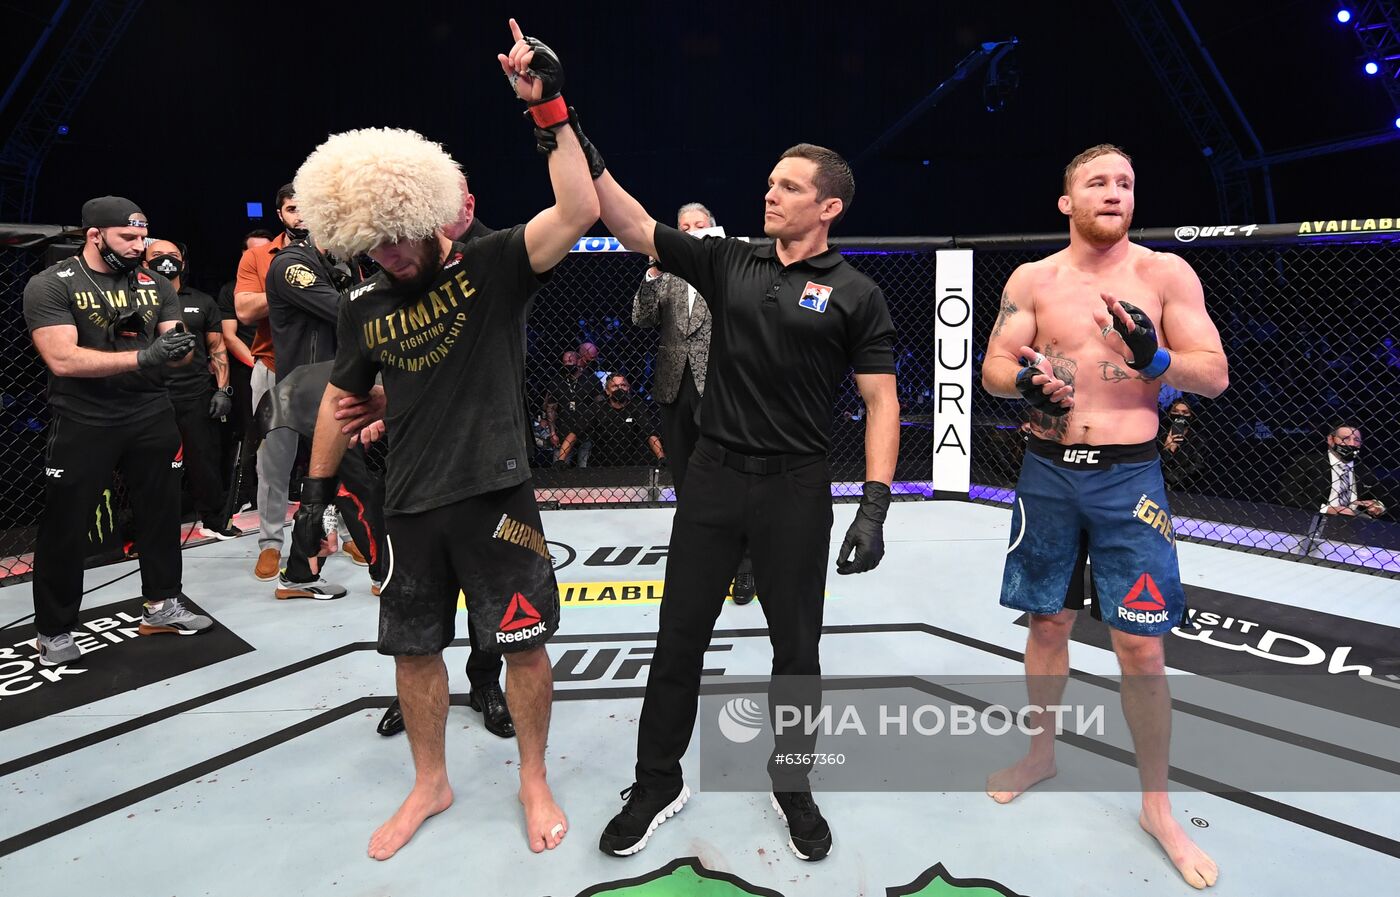 Хабиб Нурмагомедов защитил титул чемпиона UFC в легком весе